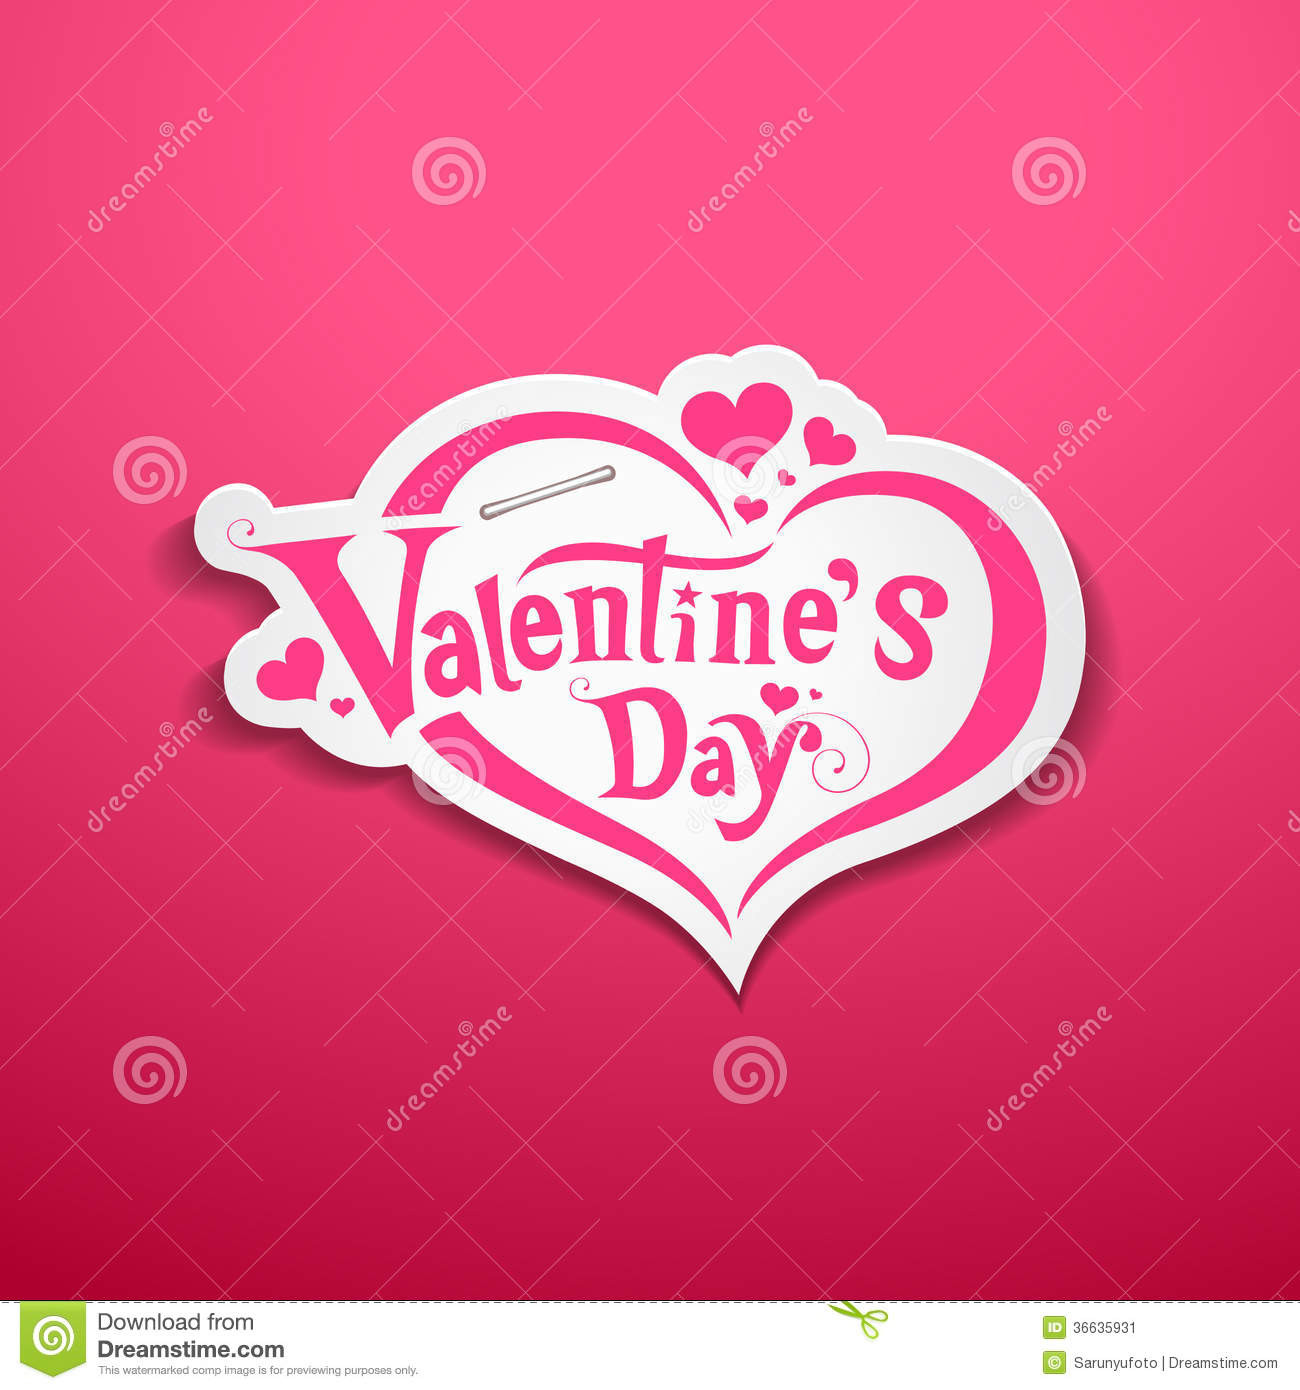 Valentines Day Design
 Happy Valentines Day Lettering Design Stock Illustration